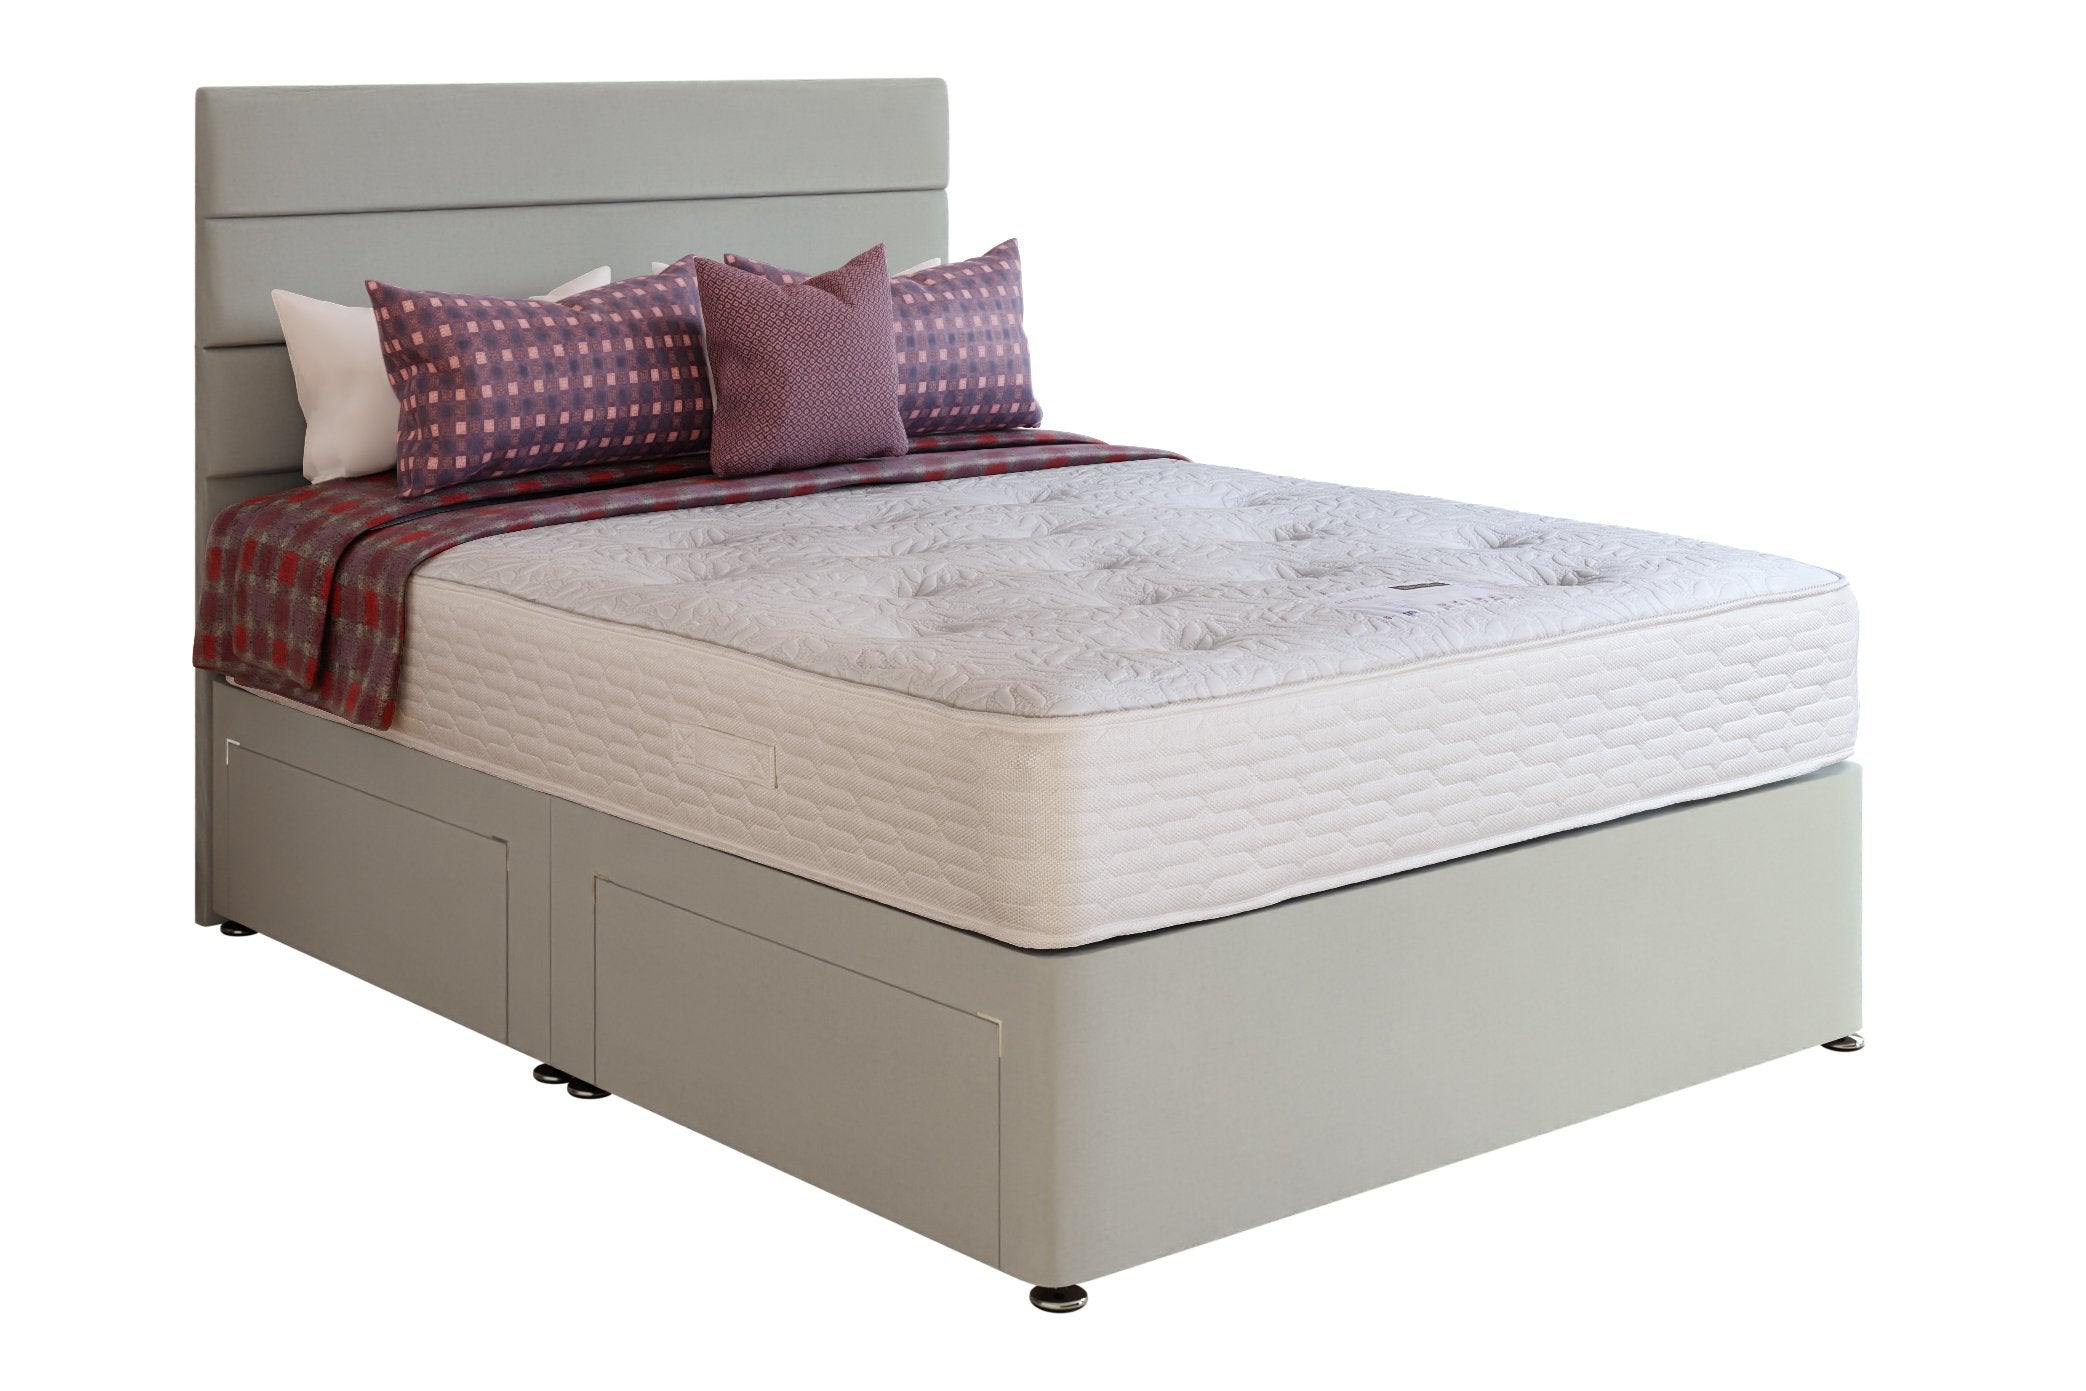 single divan beds